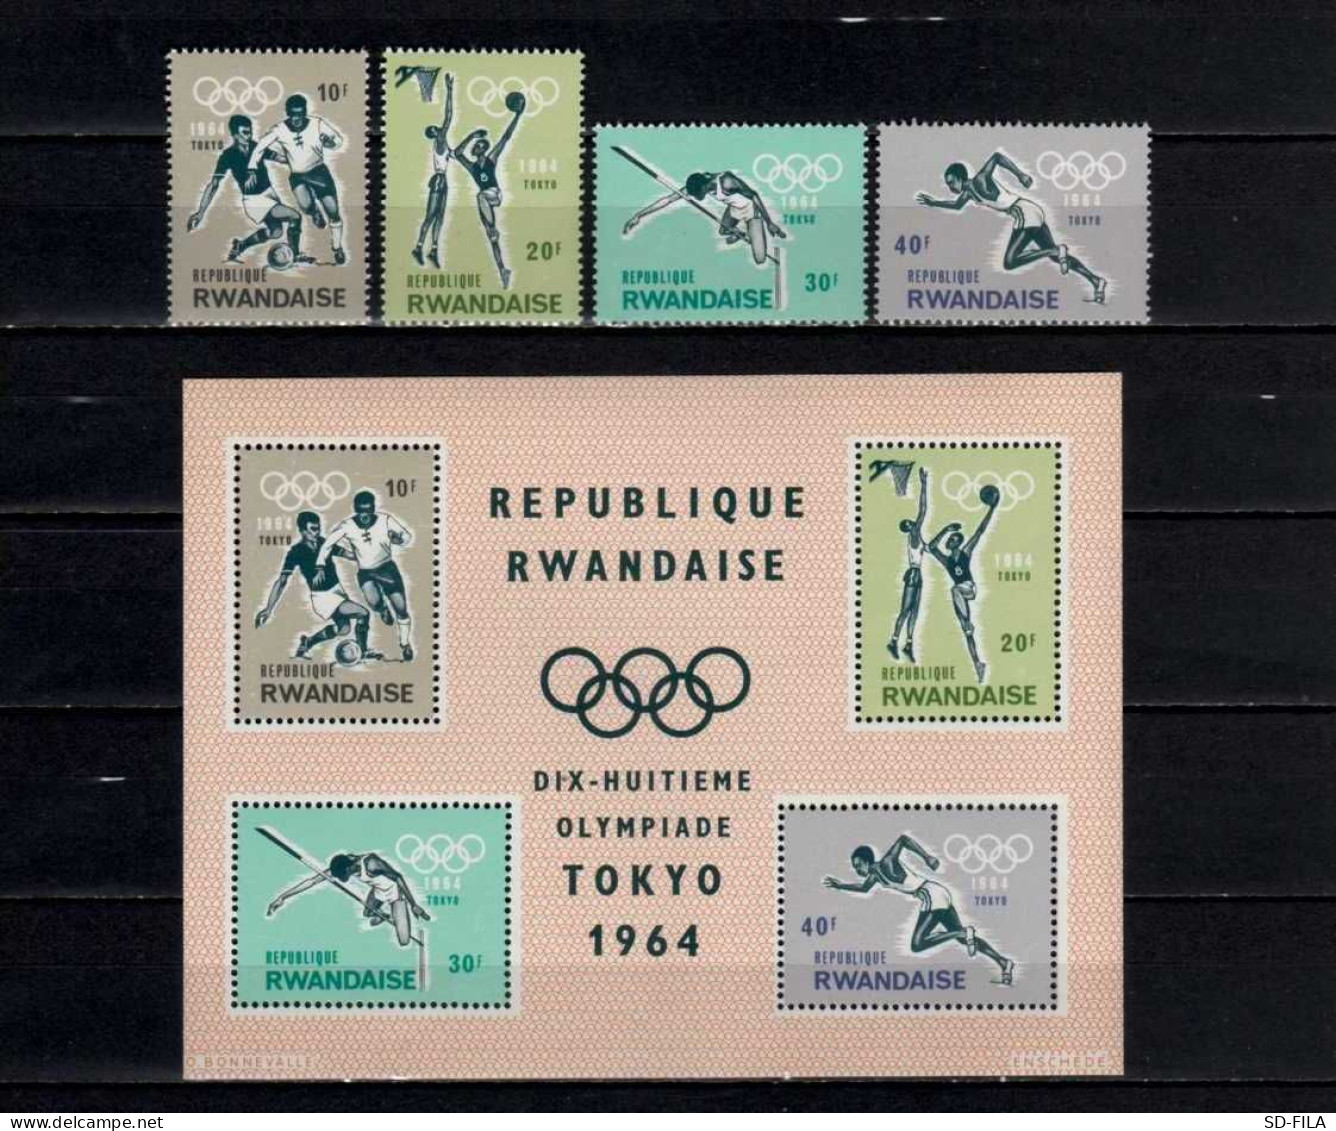 Belgian Congo - Rwanda 1964 N° 81A/82C + BL2 MNH Olympic Games - Jeux Olympique Tokio - Japan C15.00Eu. - Ongebruikt